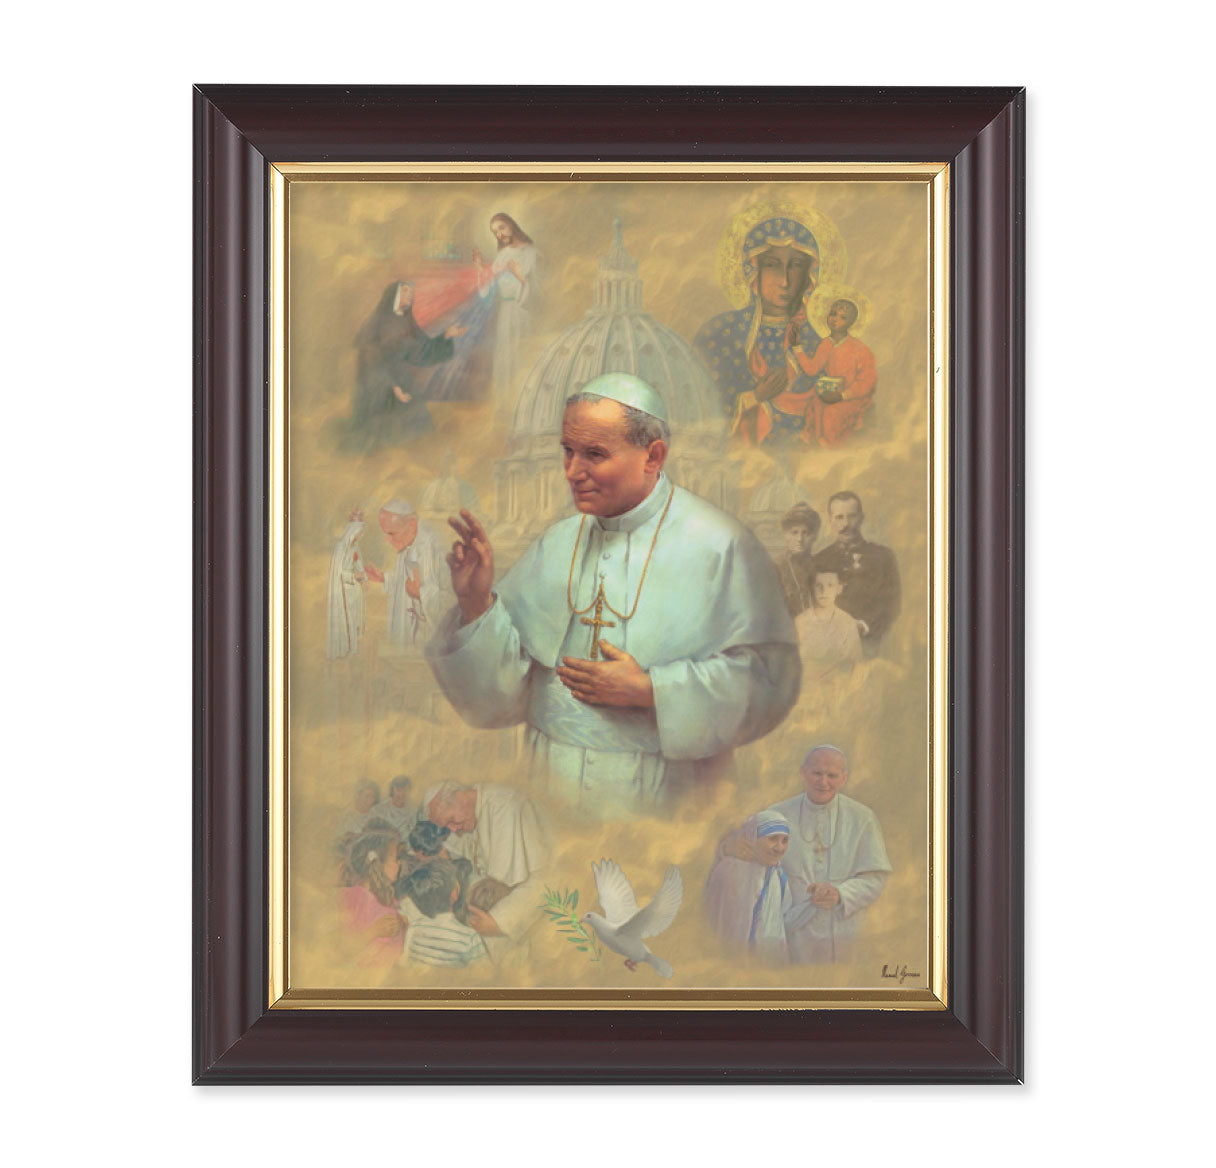 St. John Paul II Picture Framed Wall Art Decor, Medium, Classic Fluted Dark Walnut Finished Frame with Gold-Leaf Lip